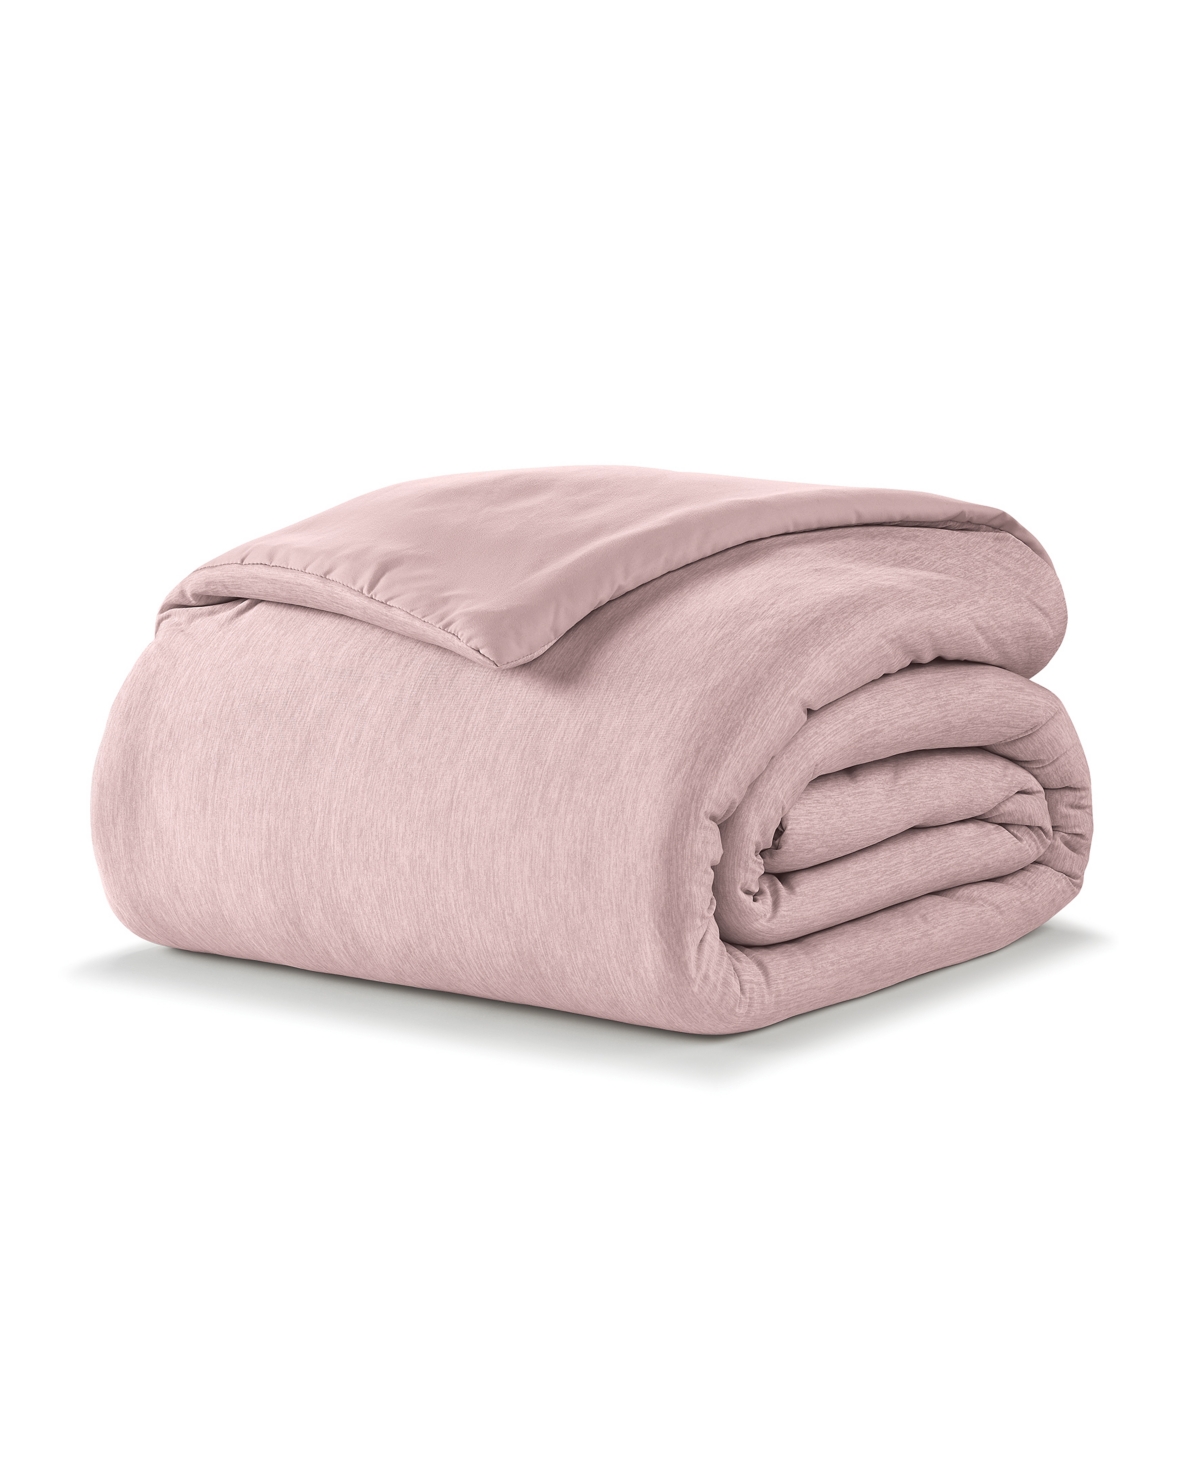 Ella Jayne Cooling Jersey Down-alternative Comforter, Full/queen In Rose